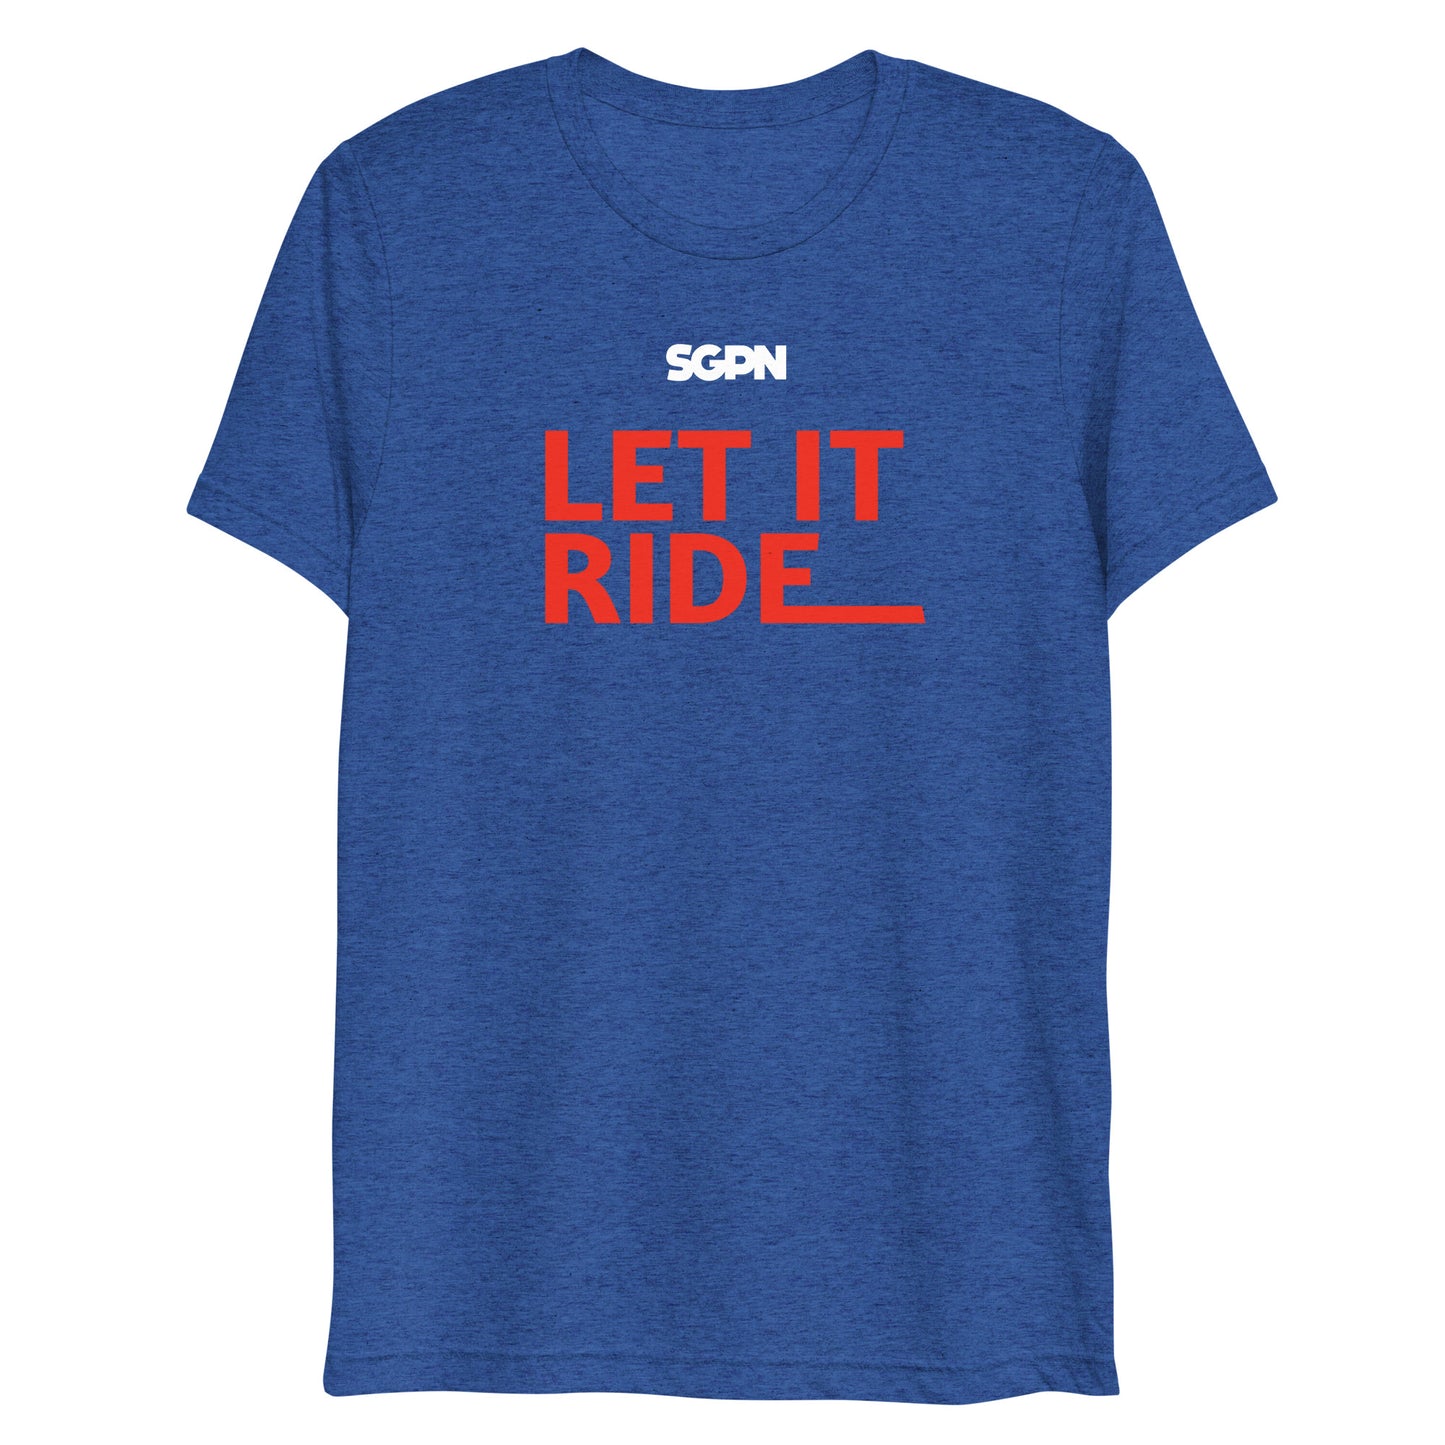 SGPN Let it Ride Short sleeve t-shirt